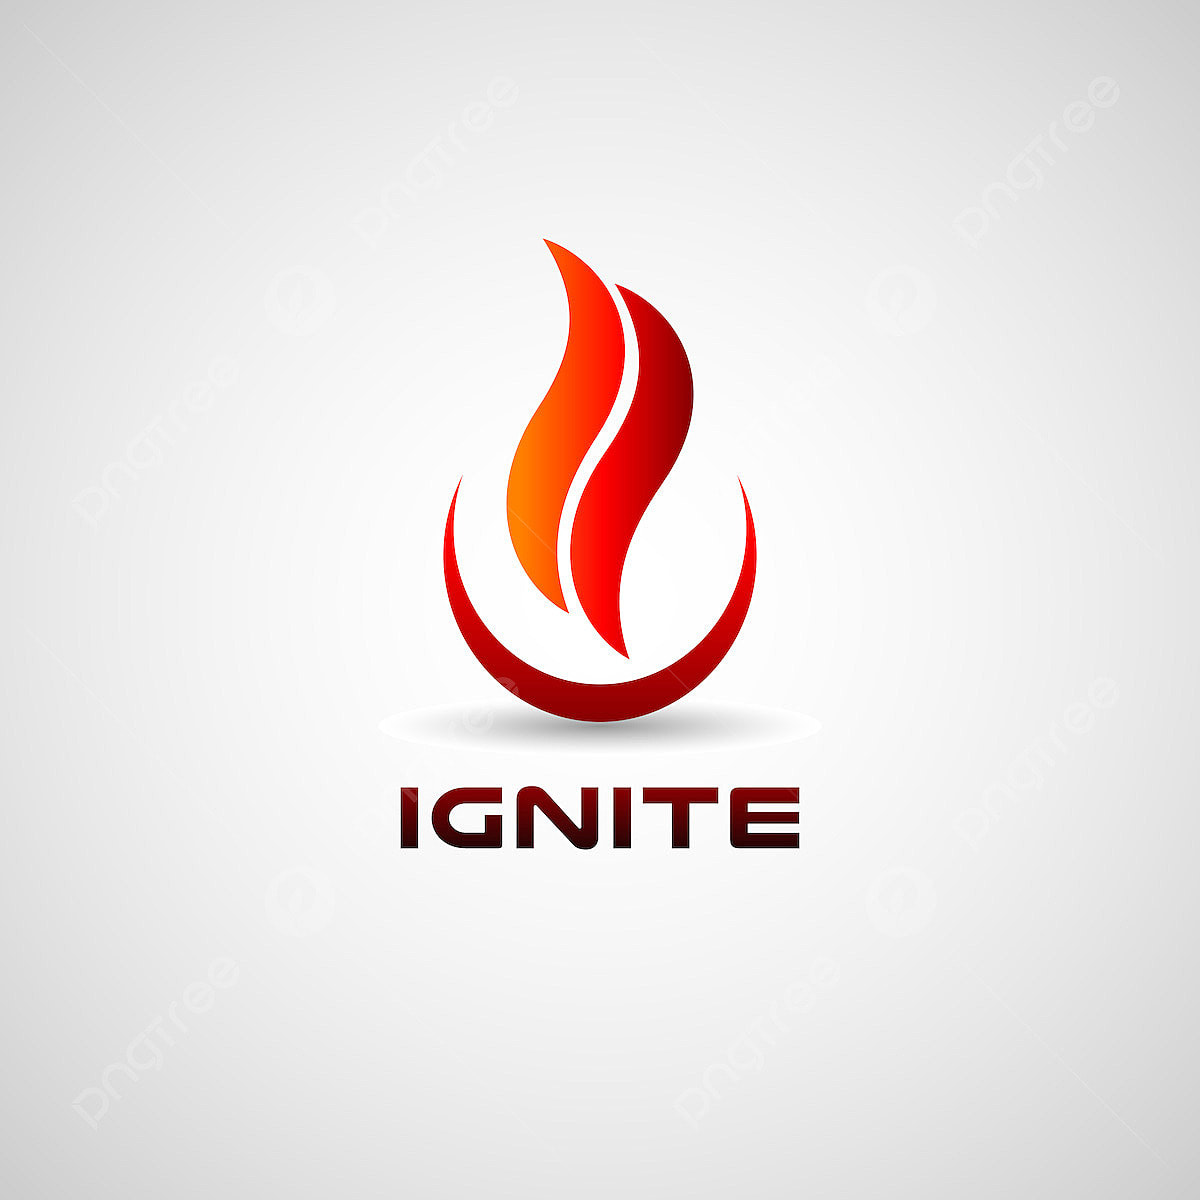 Ignite Logo PNG Transparent Image Free Download